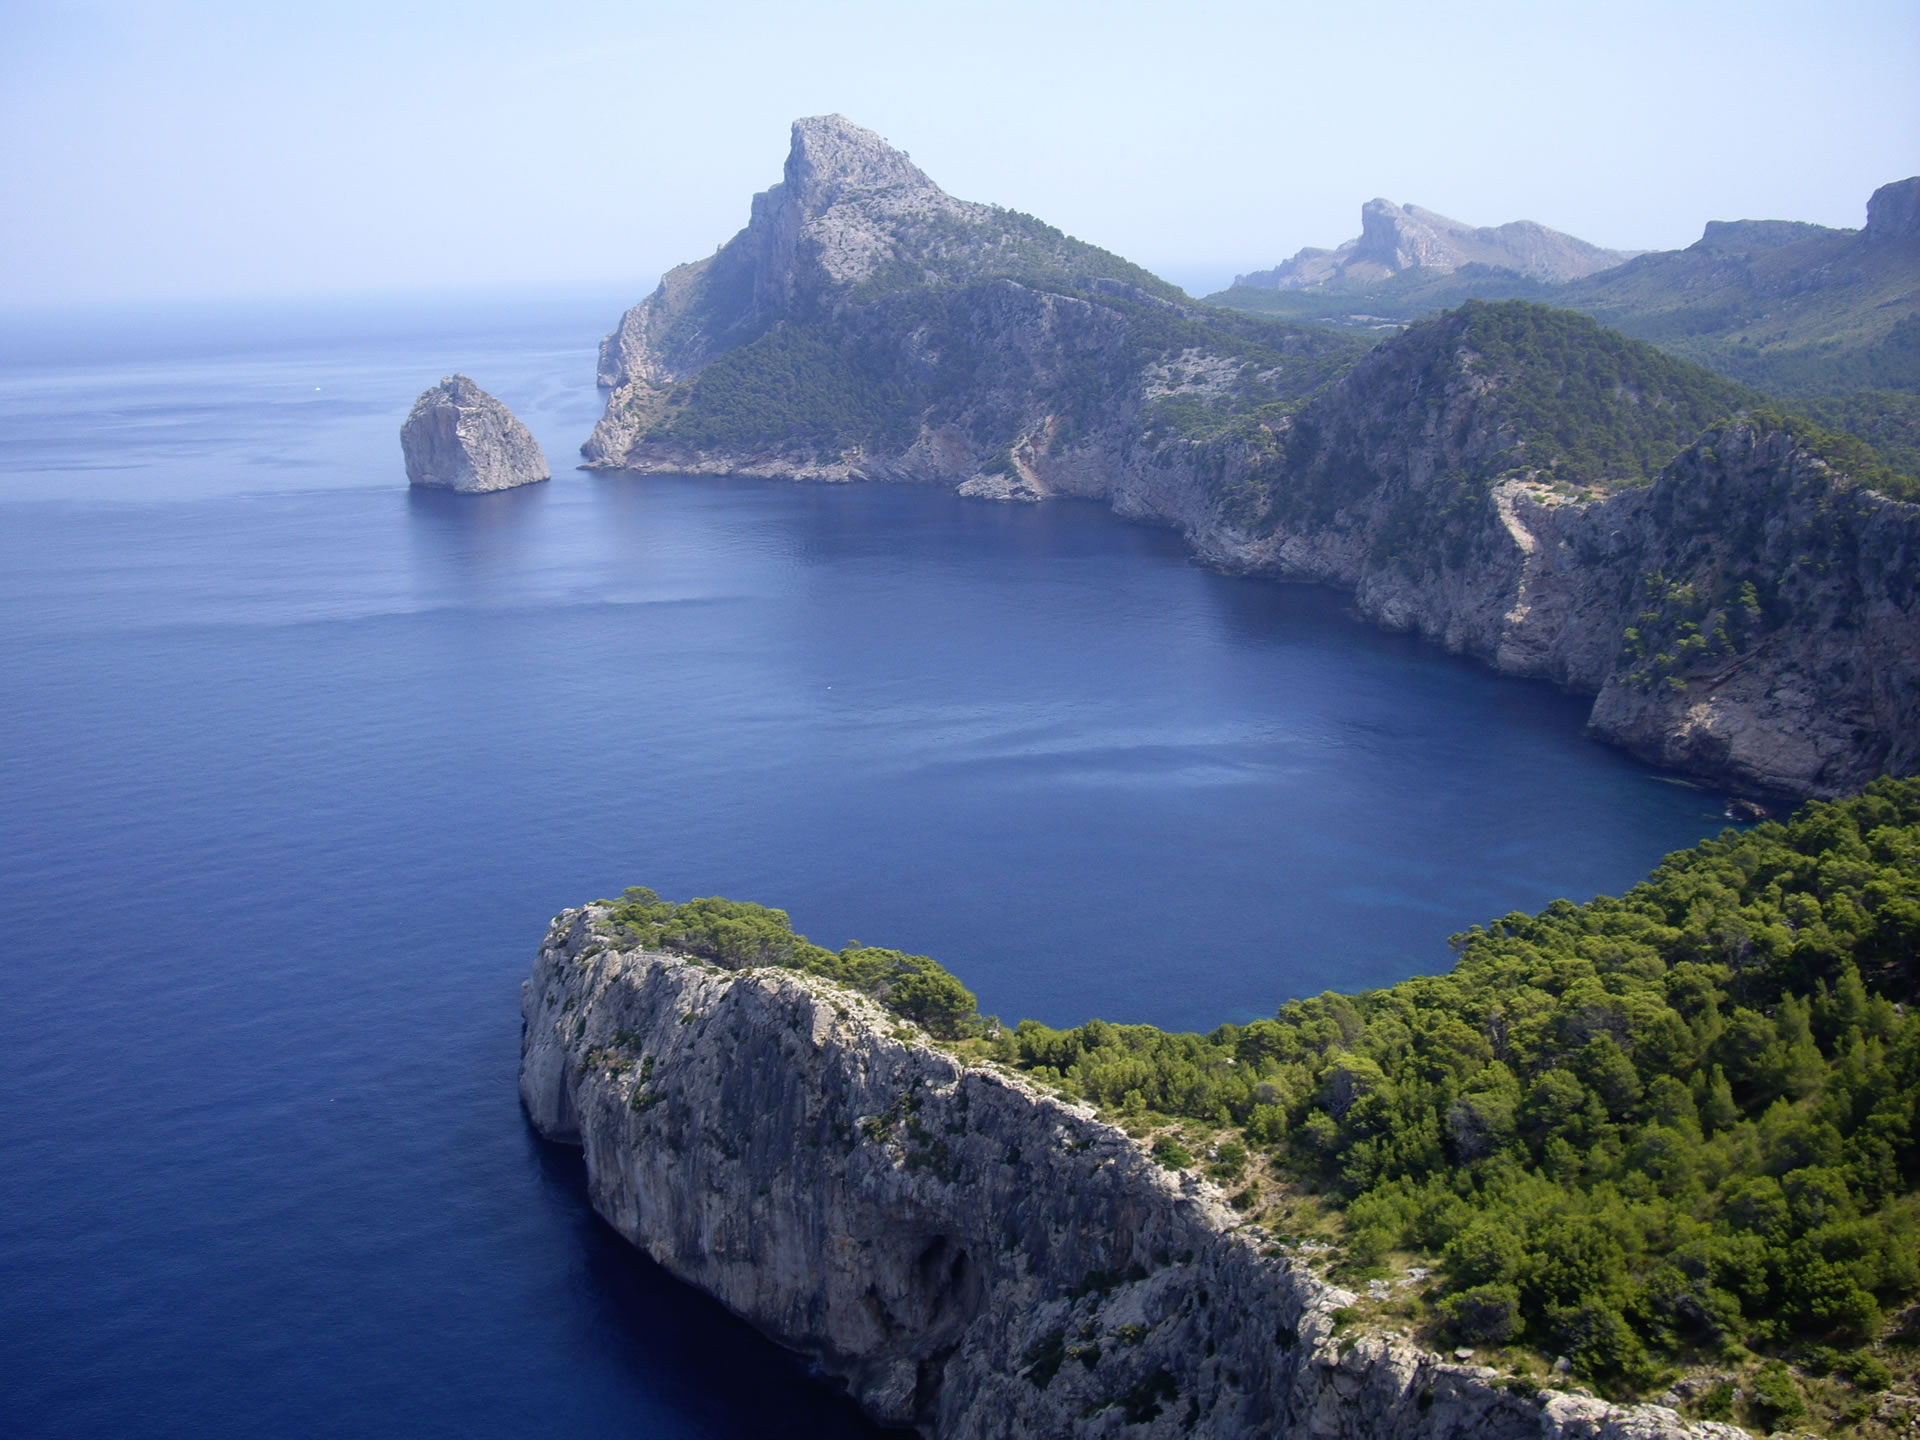 Majorca - highly popular holiday destination